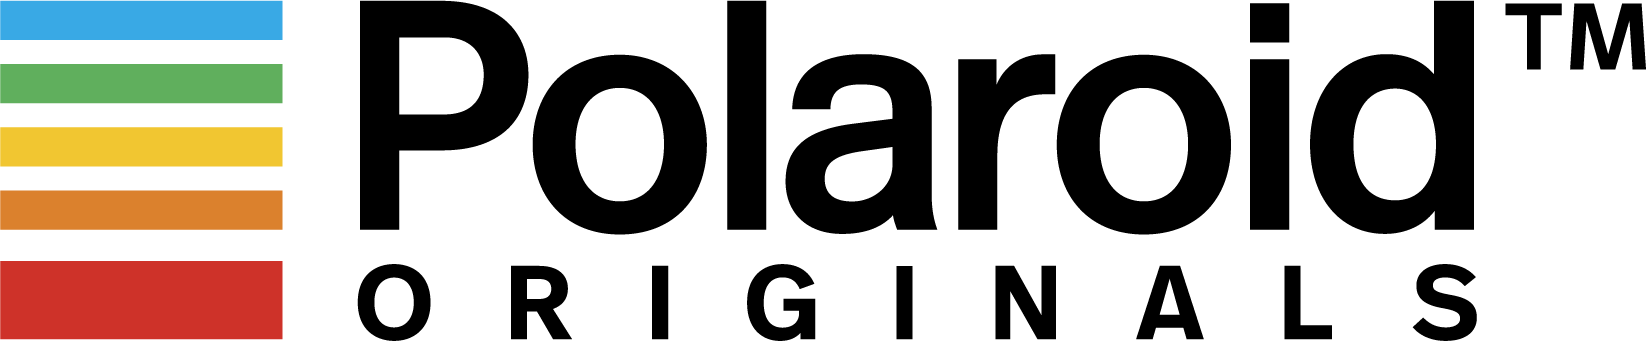 Polaroid Logo and Tag Line